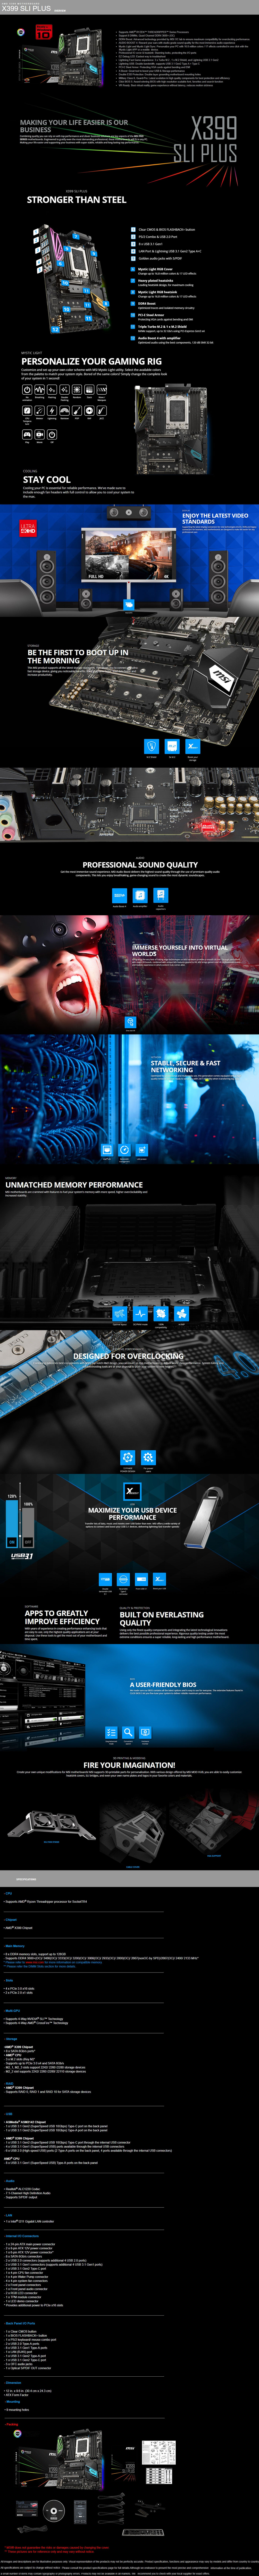 MSI X399 SLI PLUS AMD Motherboard features